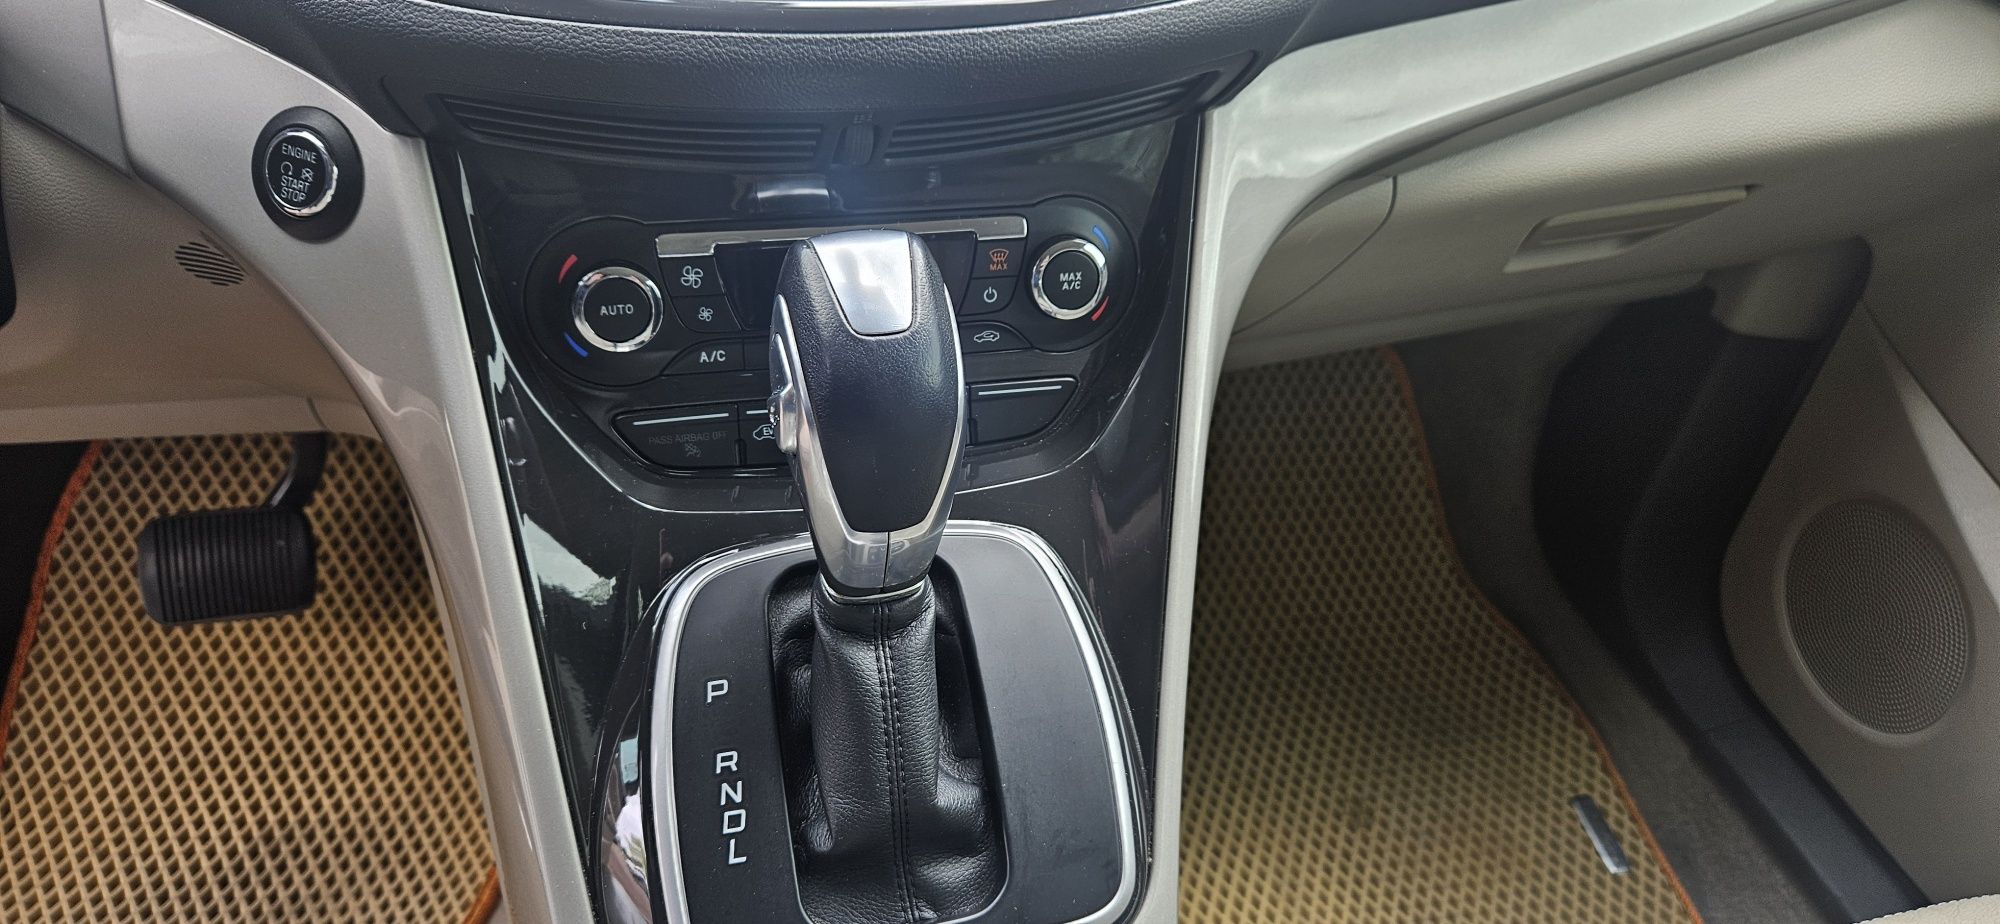 Ford C-Max Plug-in Hybrid (PHEV)